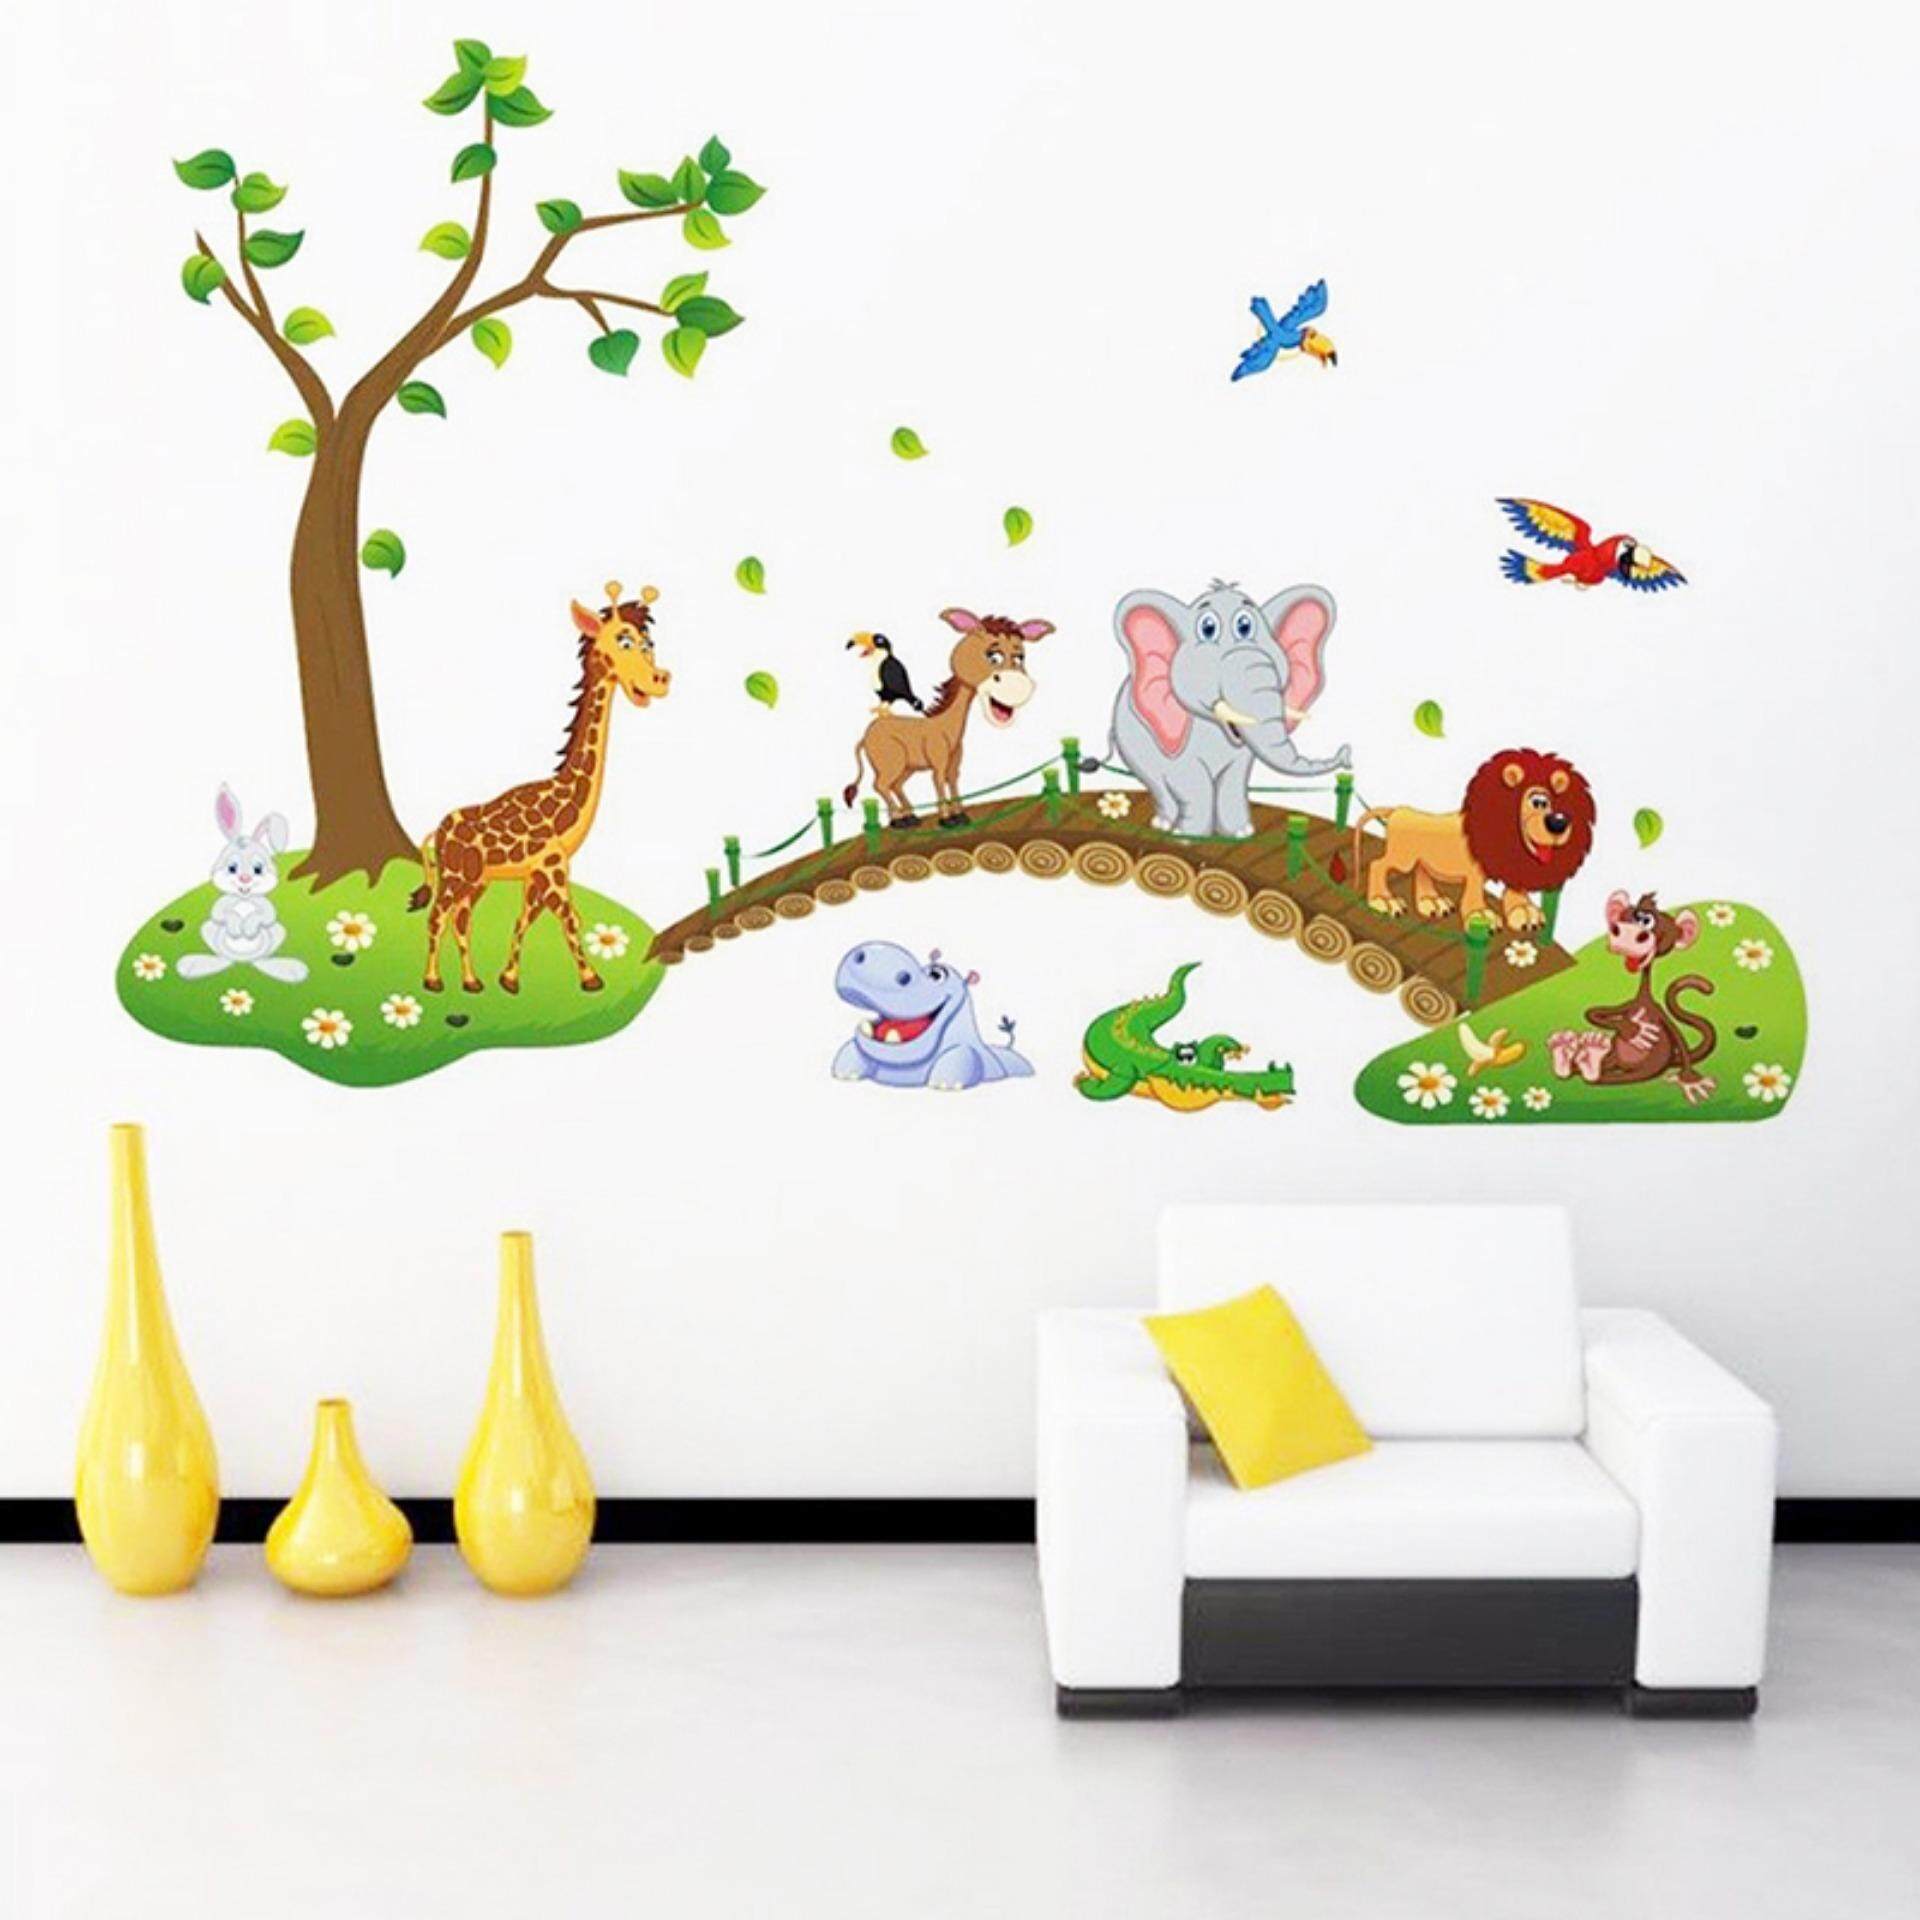 Binatang Kartun Lucu Yang Dapat Dilepas Dinding Stiker Tempel Anak Anak Bayi Nursery Room Dekorasi